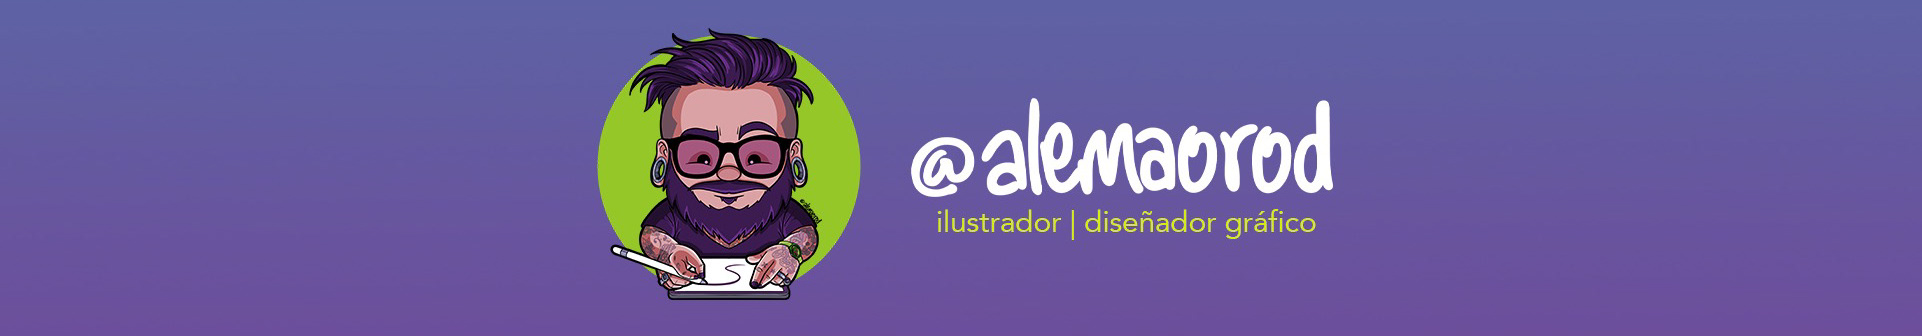 Alemao Rod's profile banner